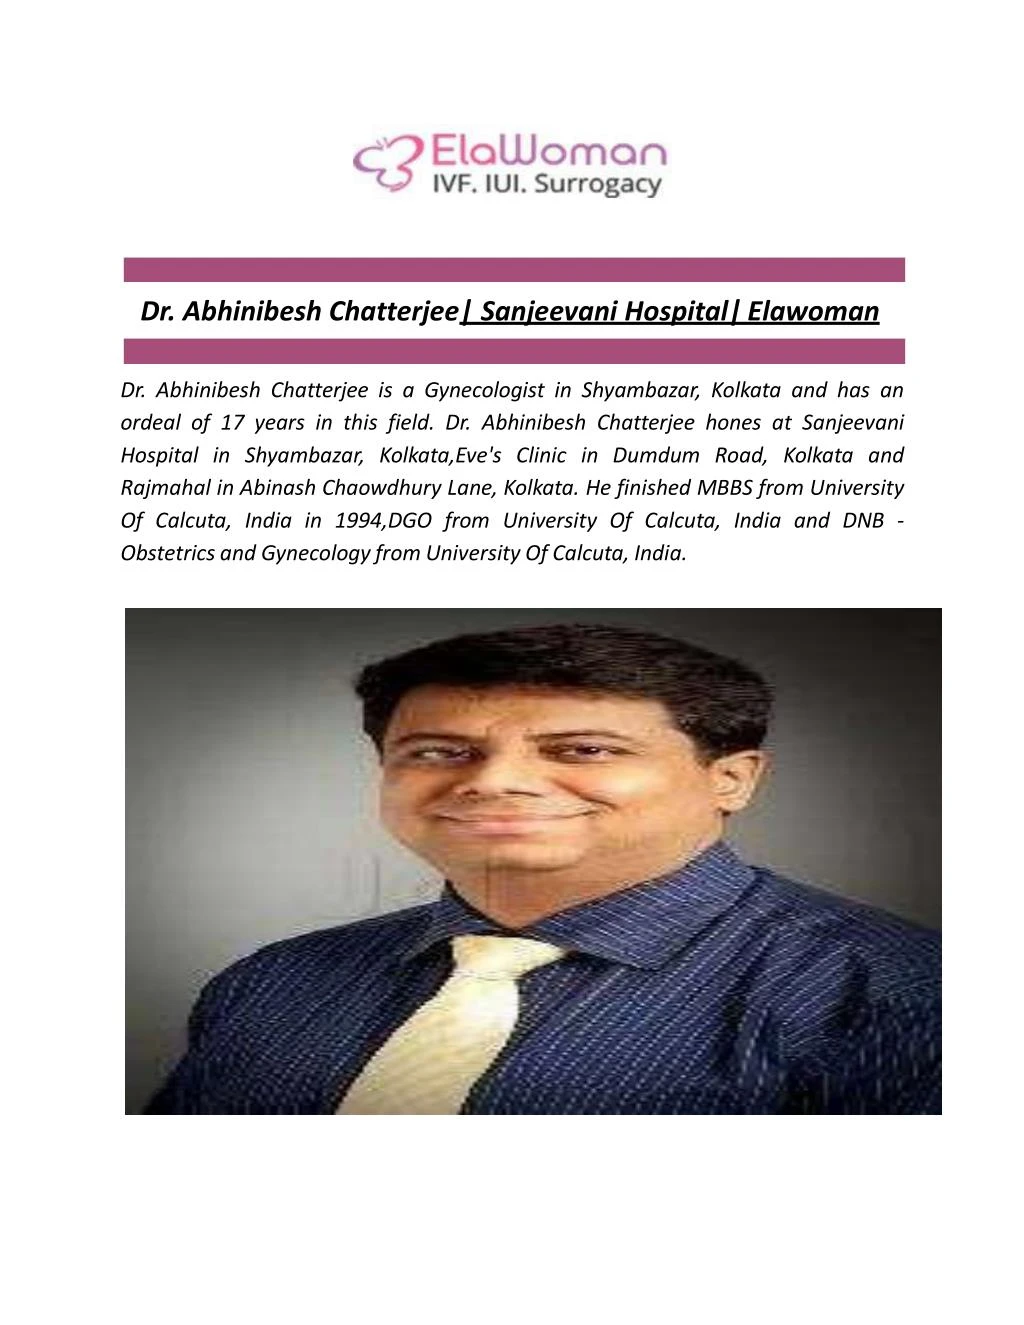 dr abhinibesh chatterjee sanjeevani hospital